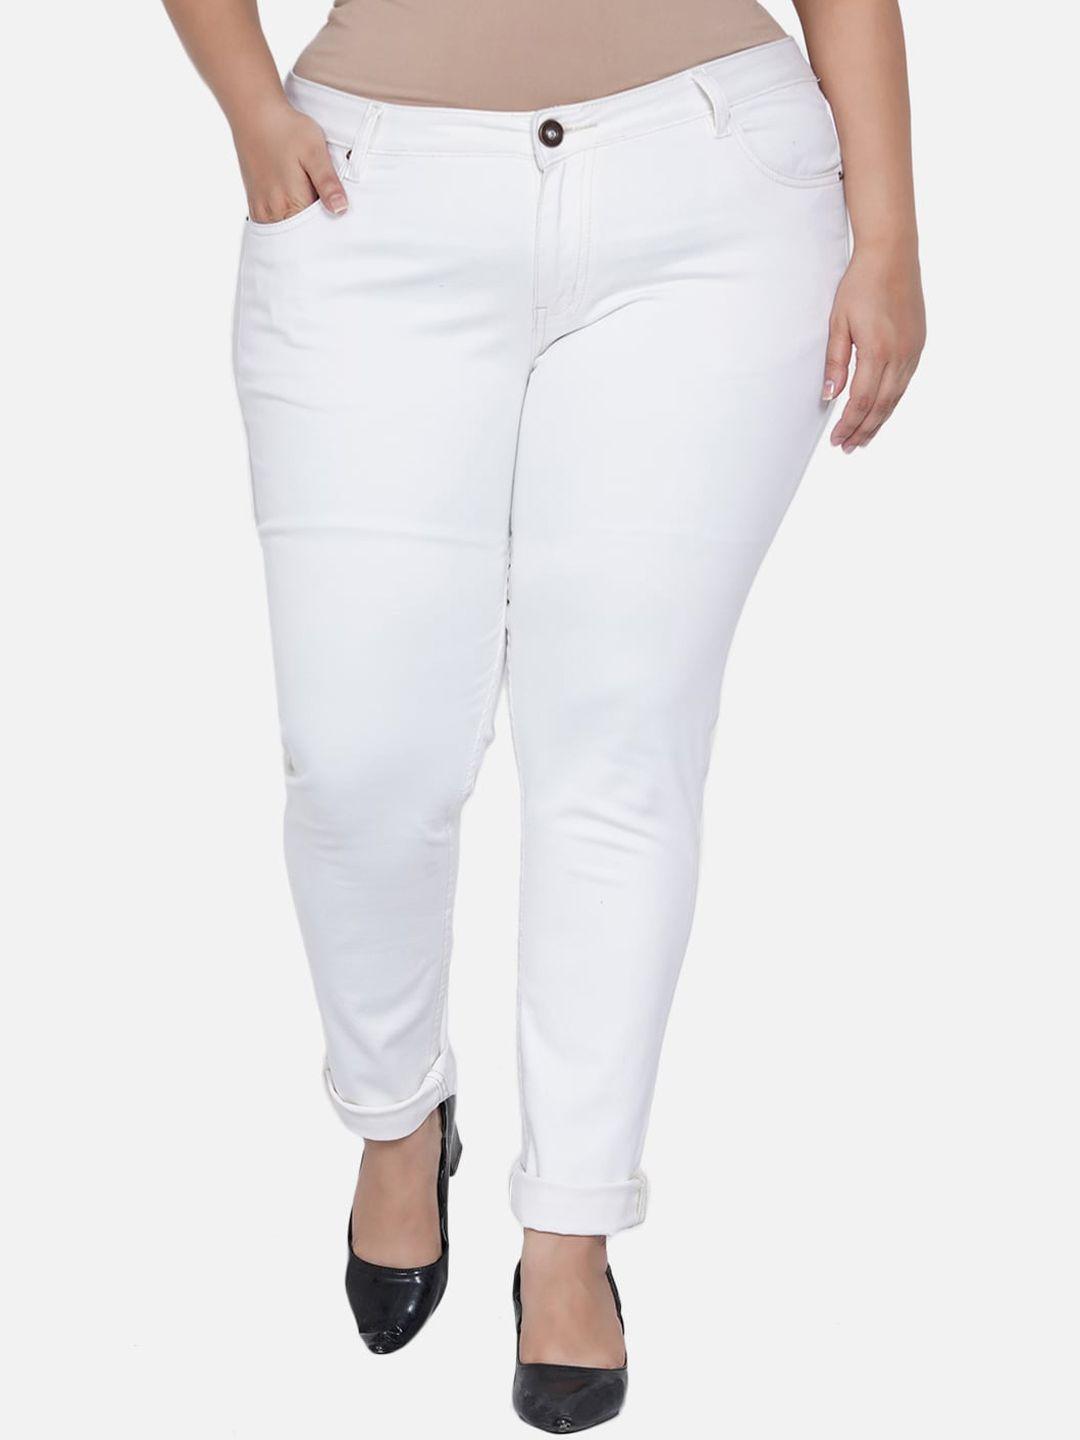 kiaahvi by john pride plus size women white skinny fit stretchable jeans